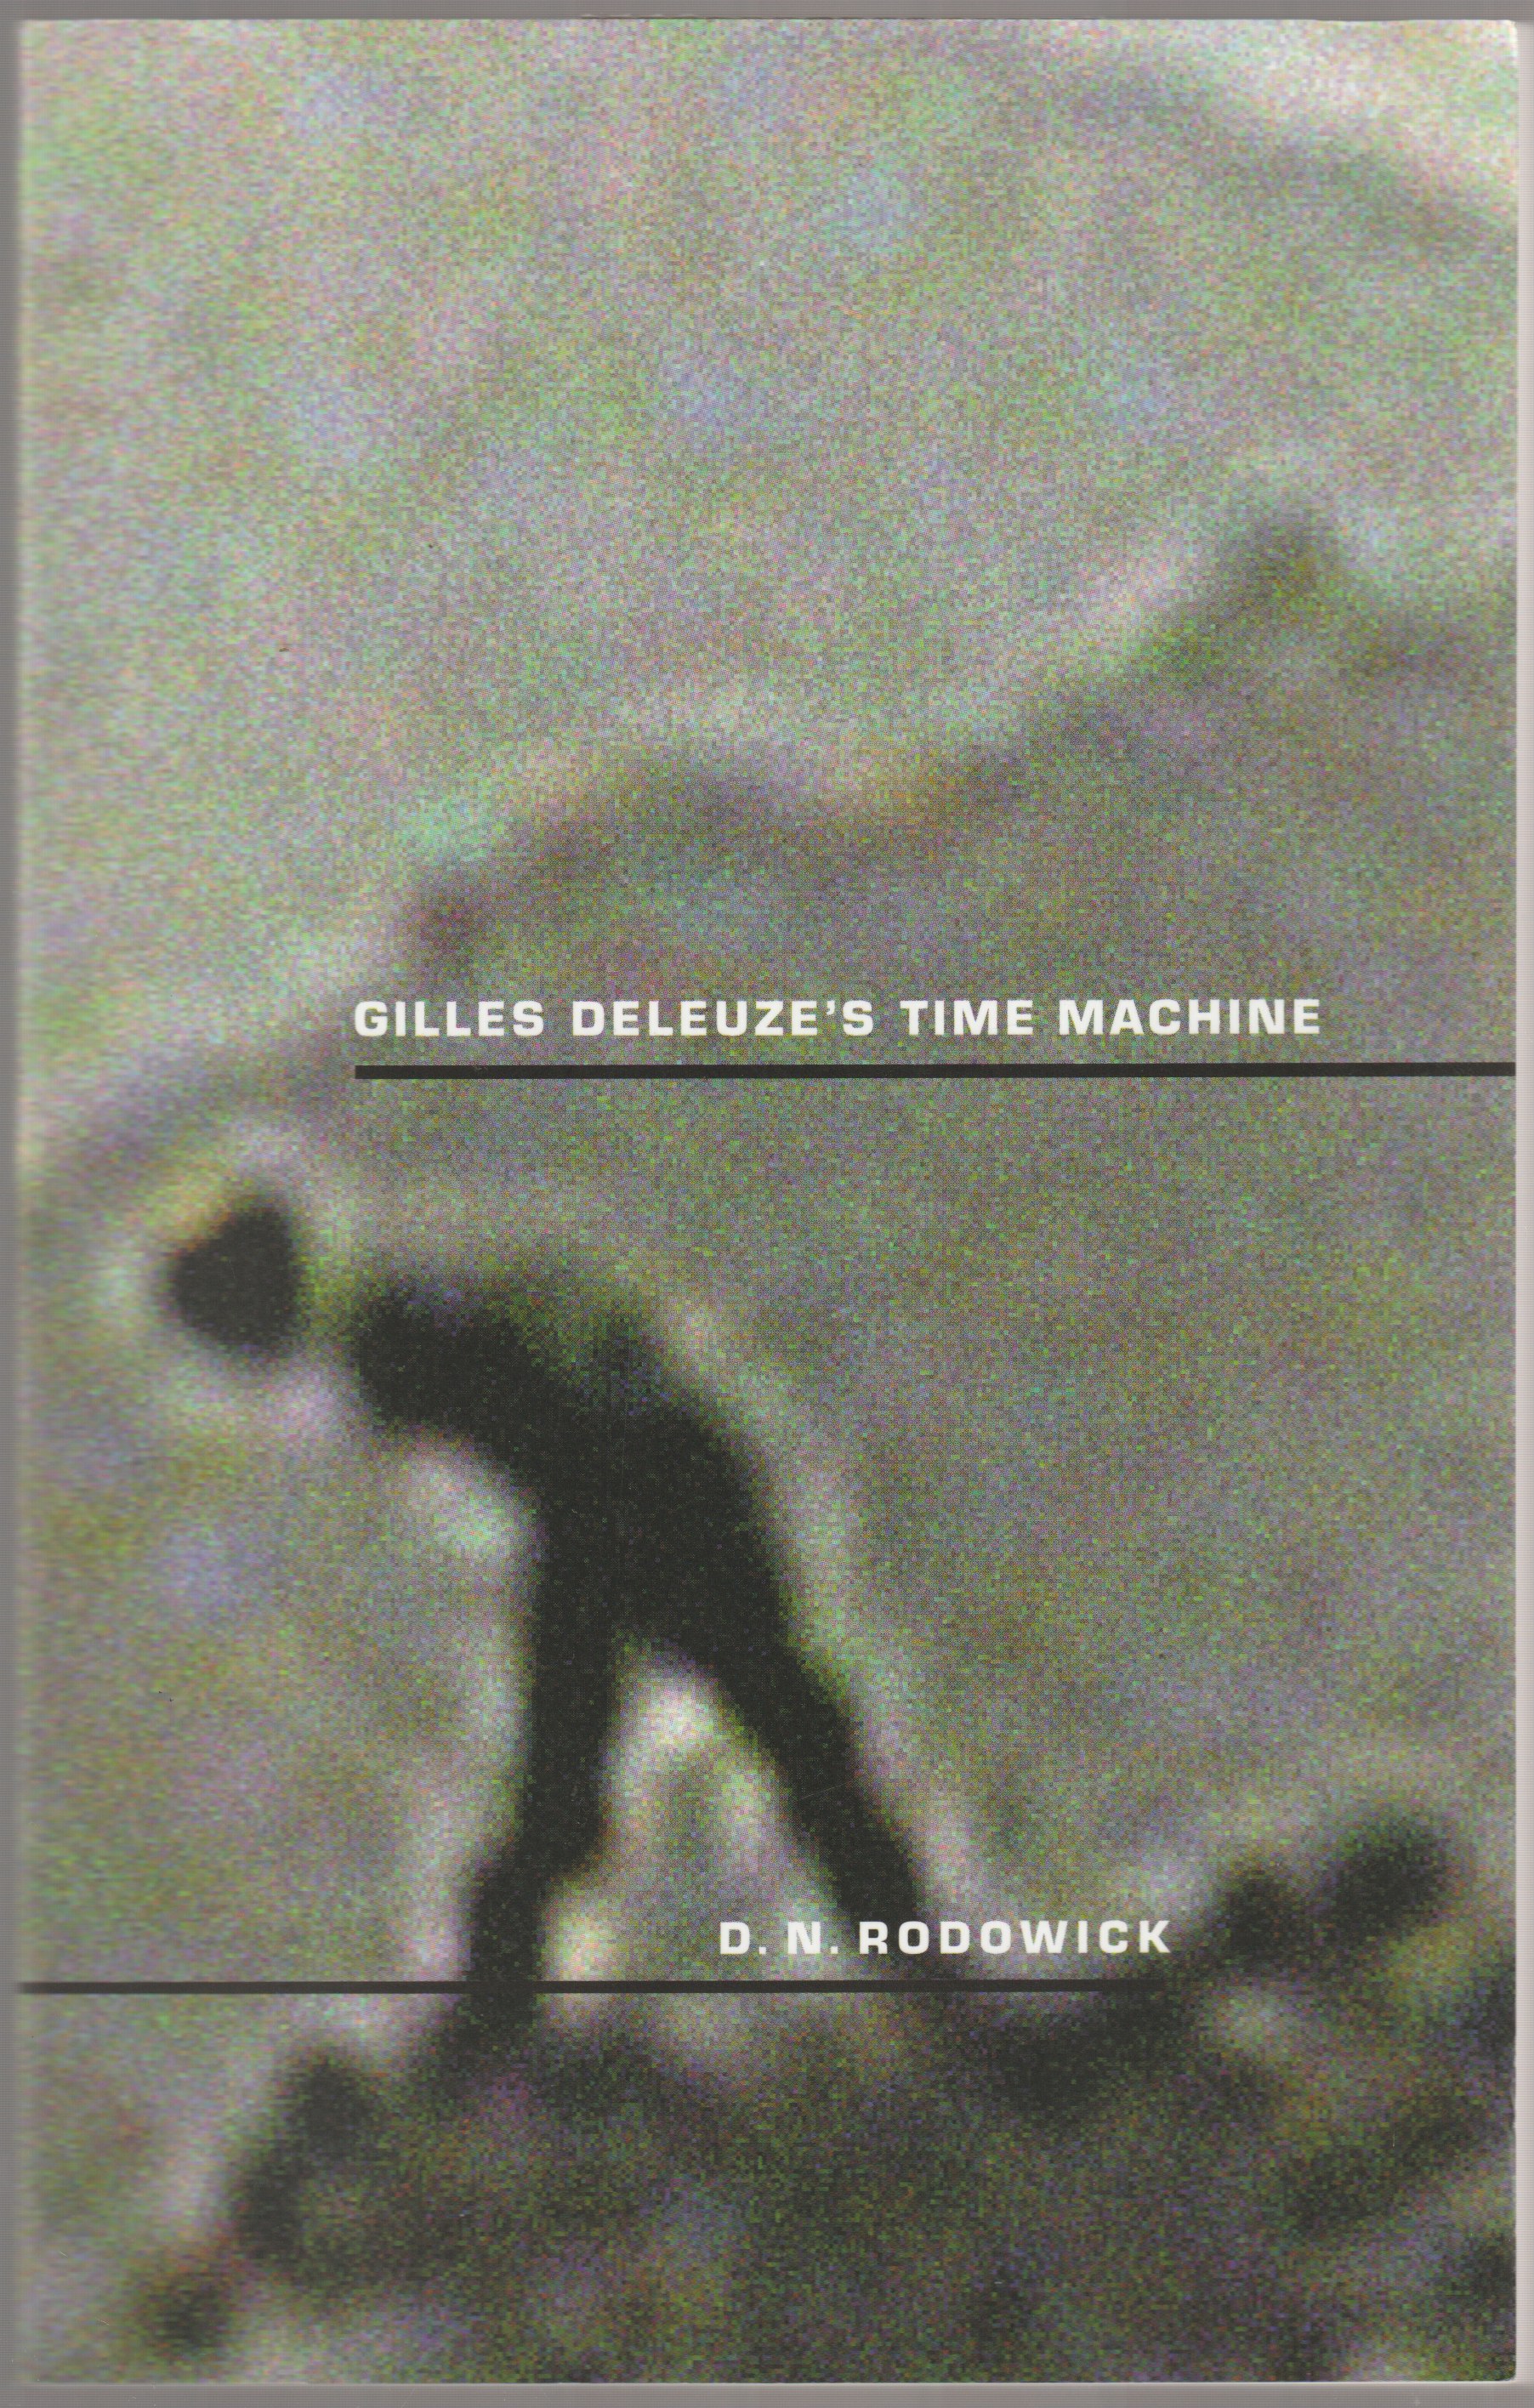 Gilles Deleuze's time machine.